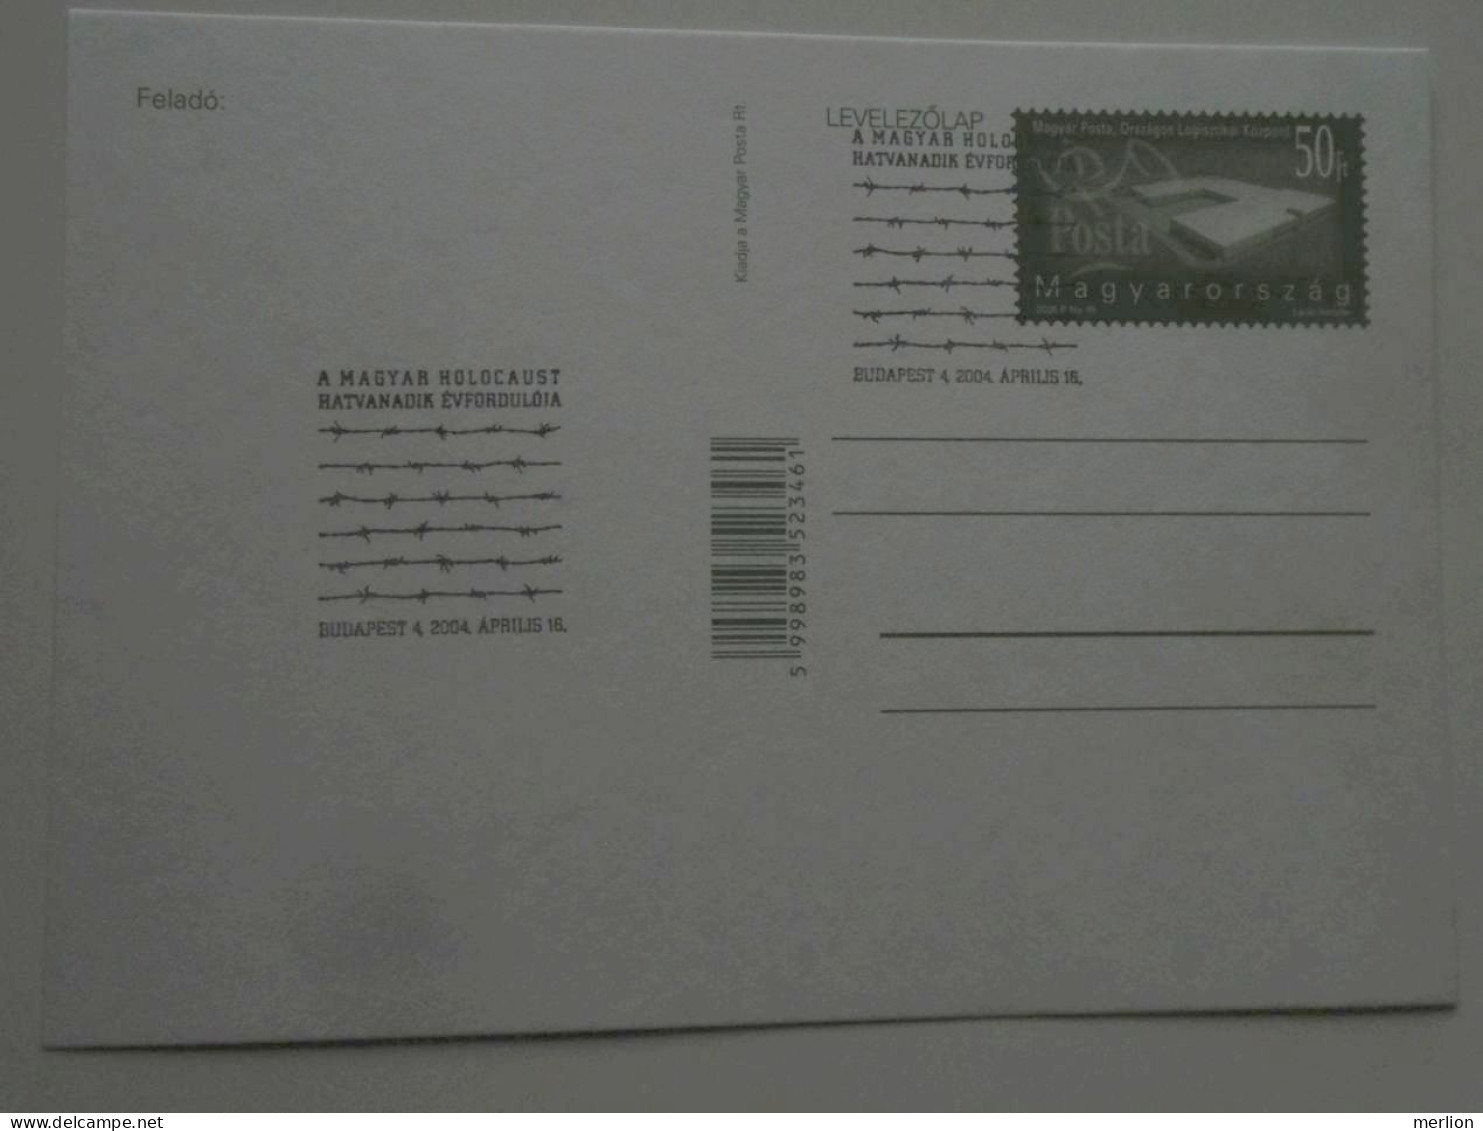 D201069   Hungary  Postal Stationery   2004 Budapest - Israel - Hungarian Holocaust  60th Anniv. - Jewish